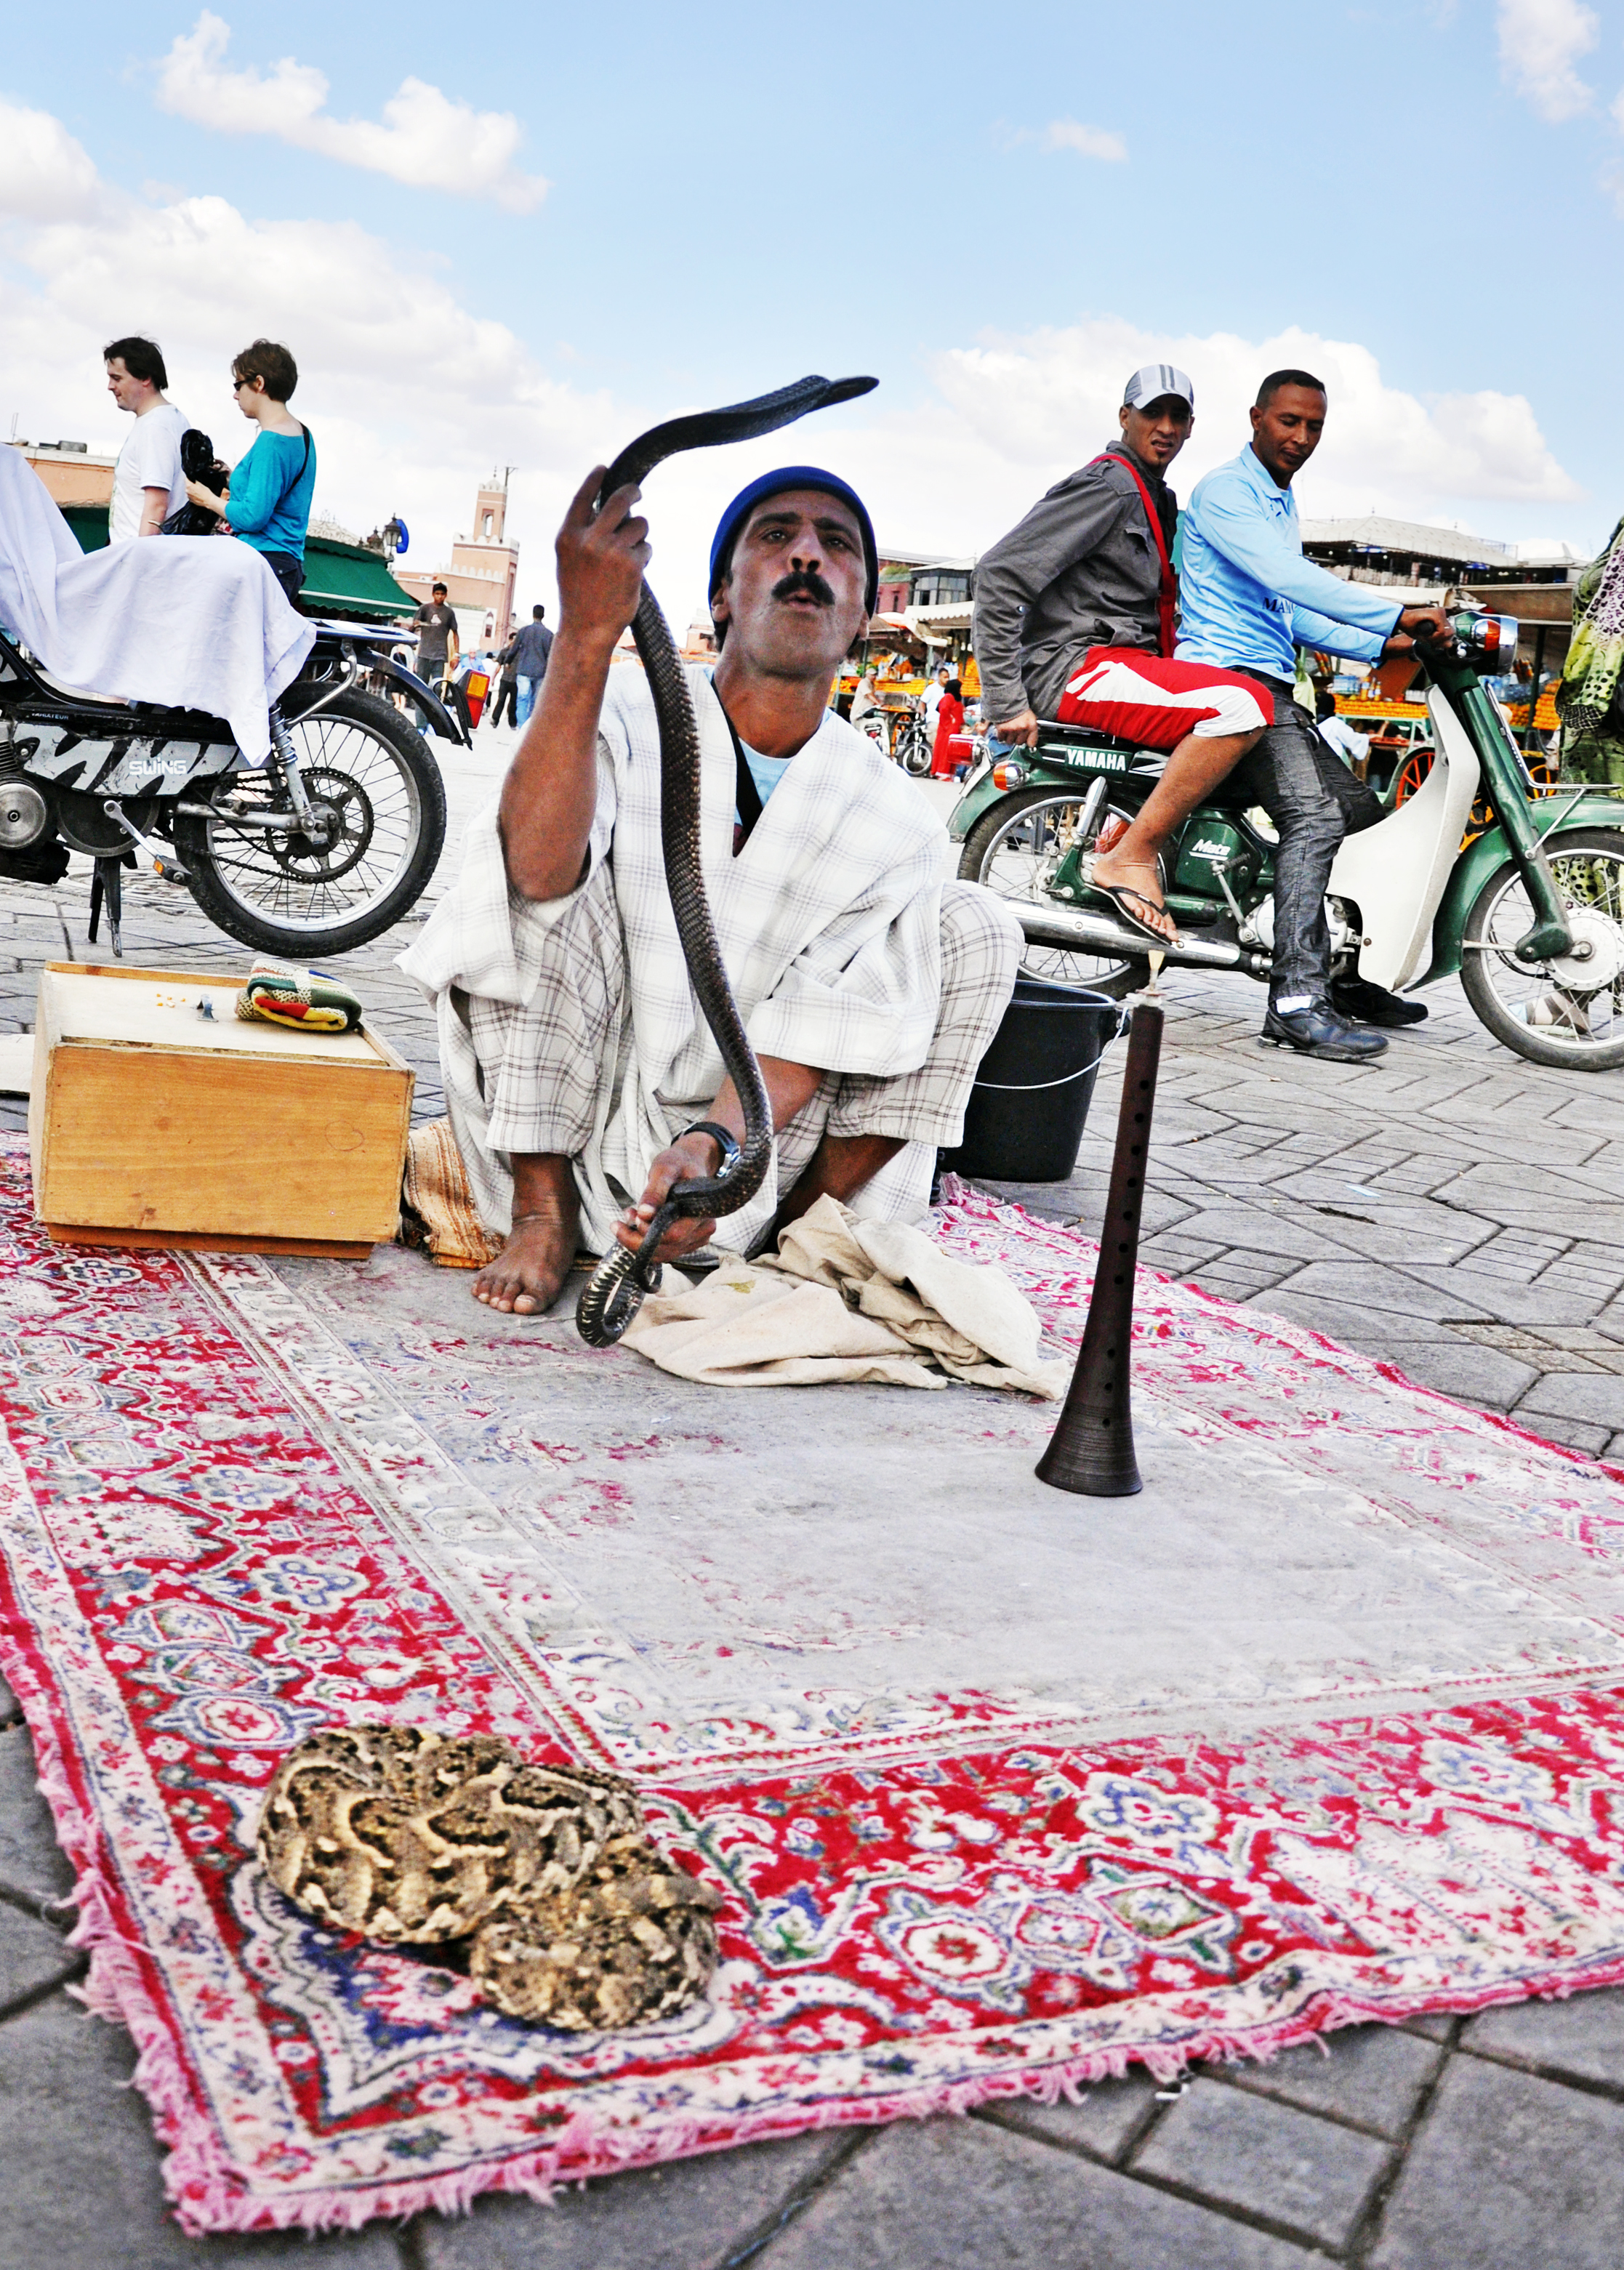 Snake charmer in morocco photo